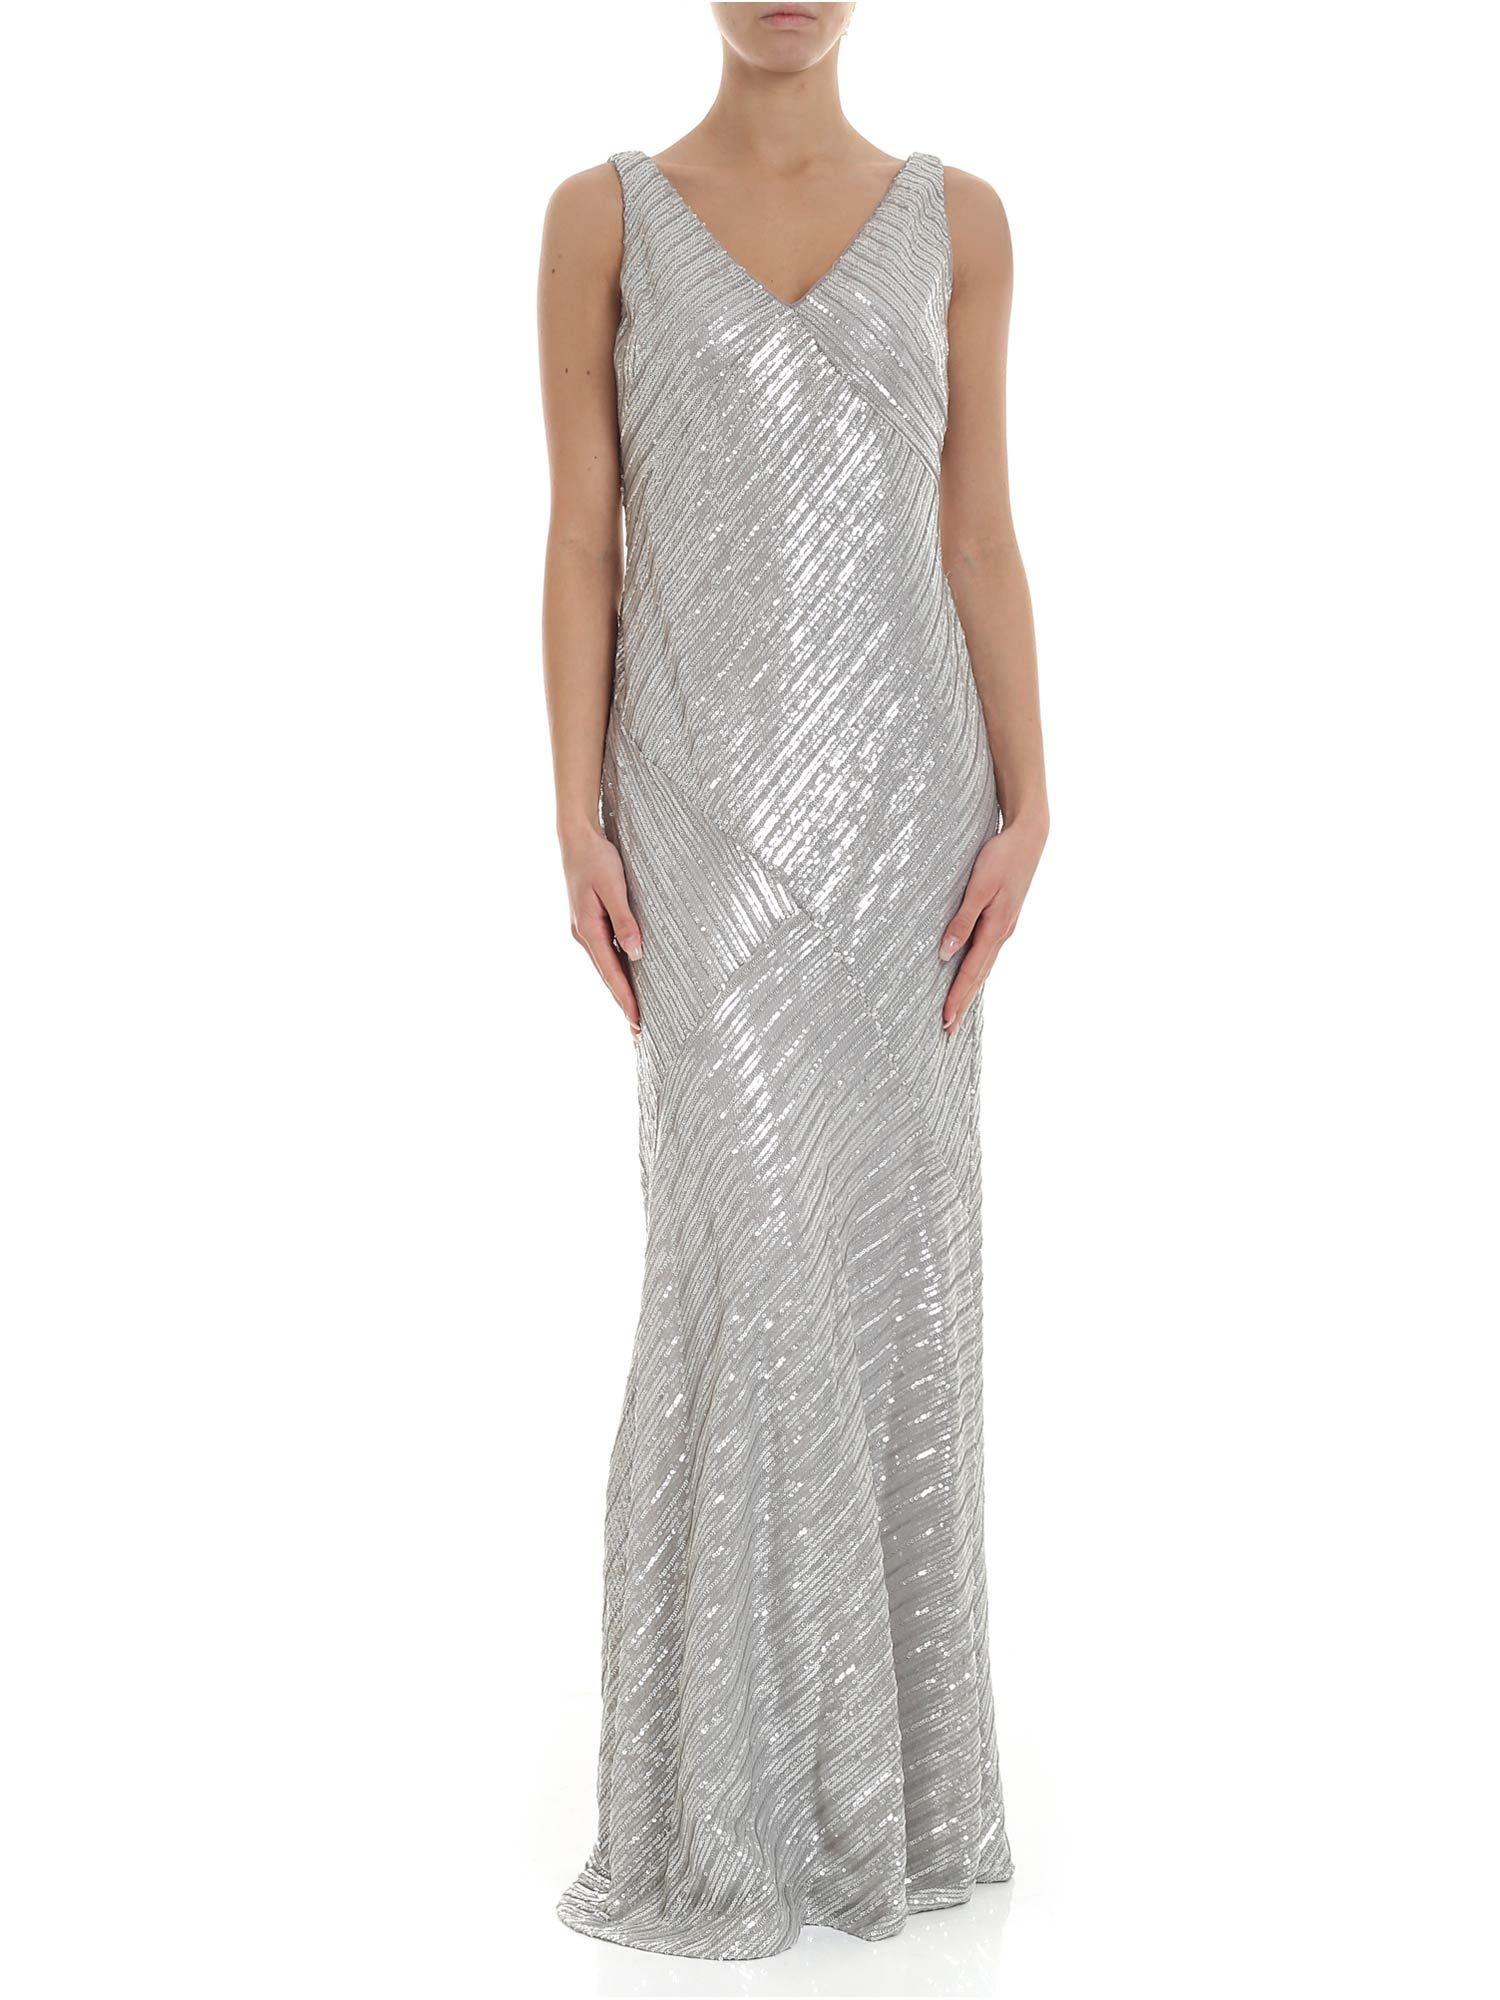 ralph lauren silver sequin dress